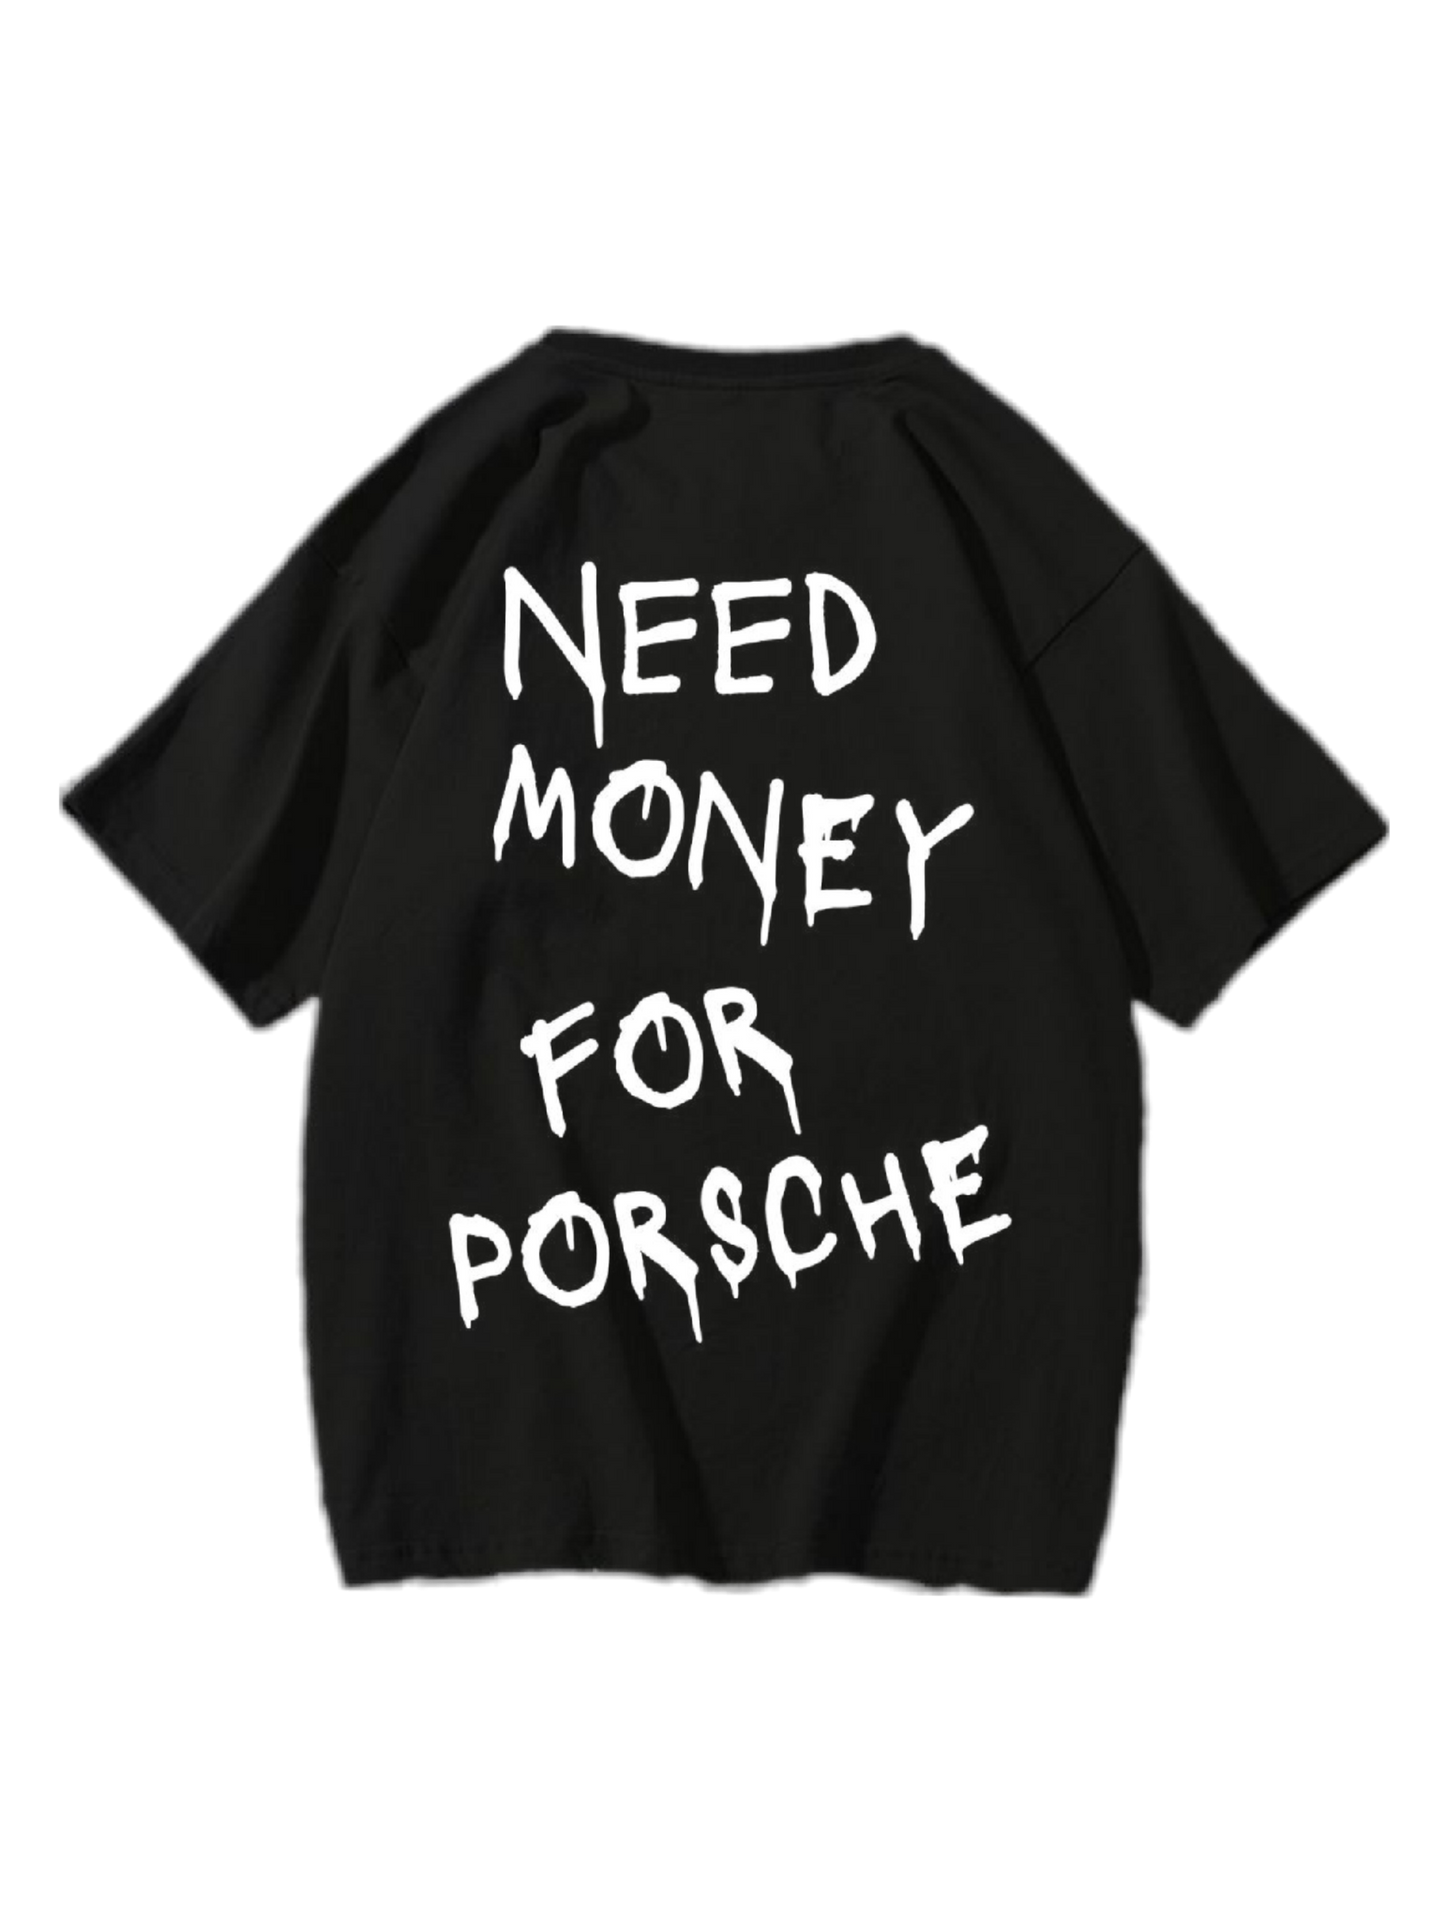 ‘Need money for Porsche’ tee